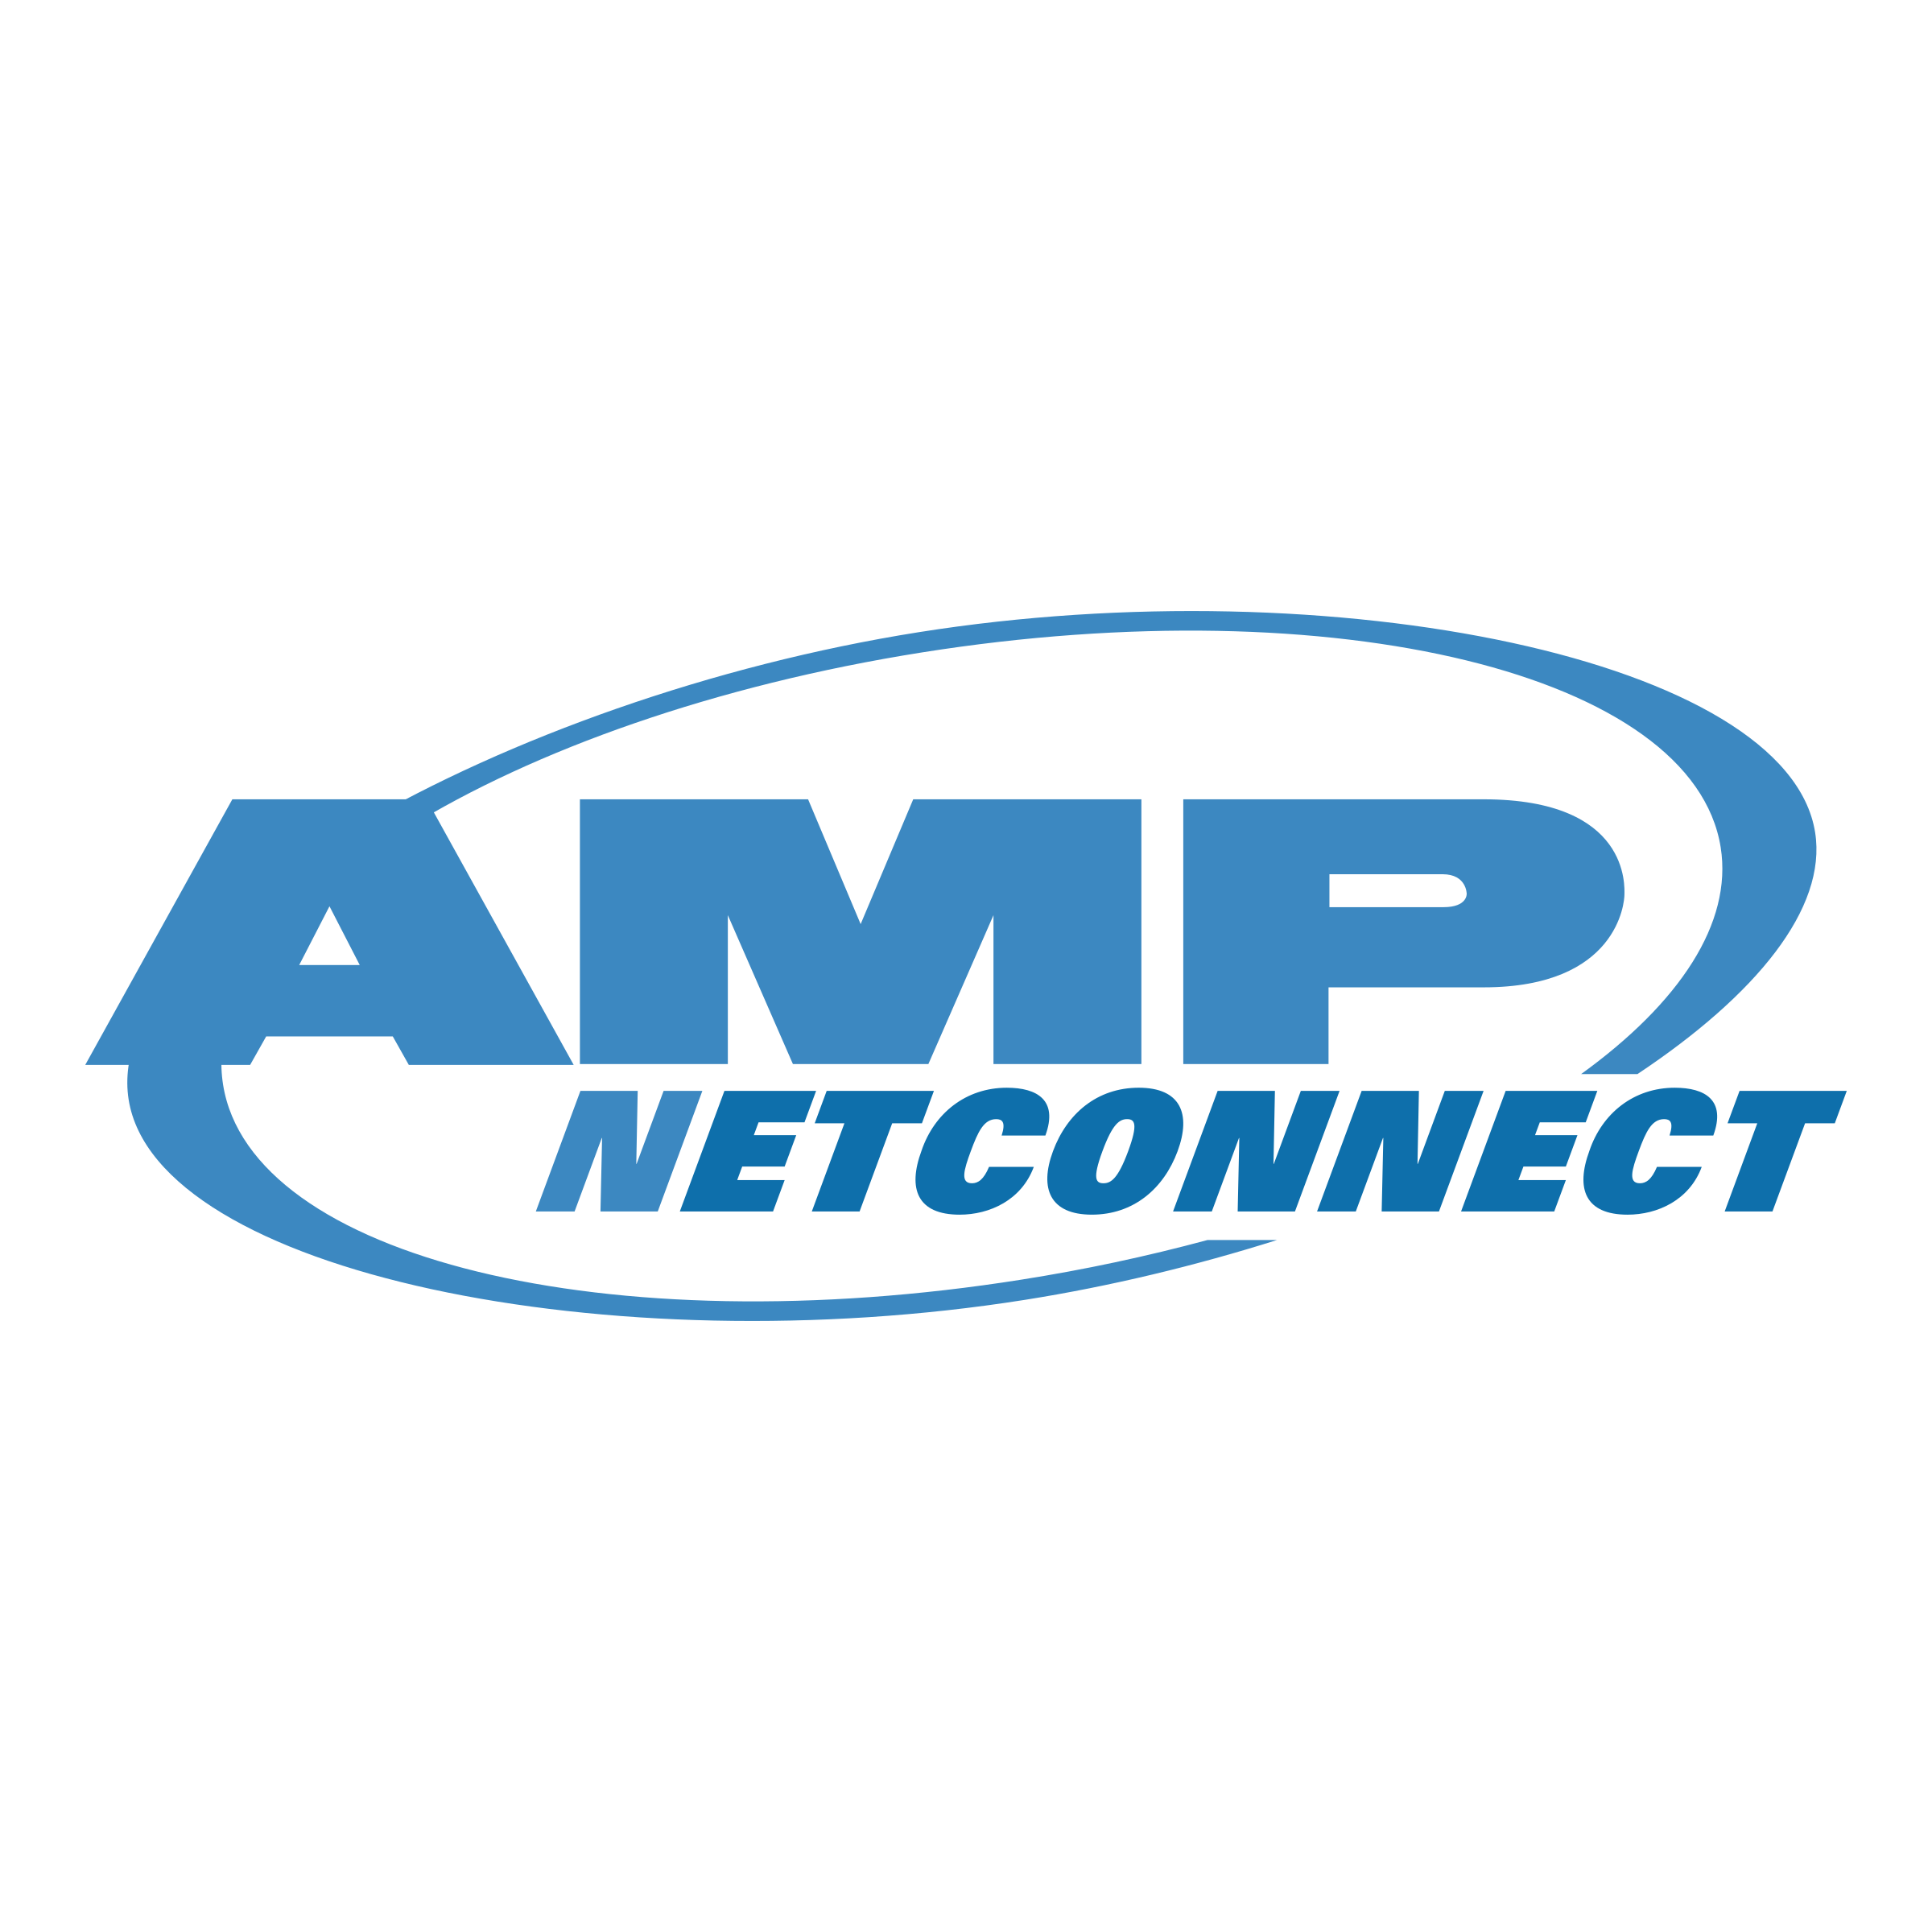 amp-netconnect-1-logo-png-transparent